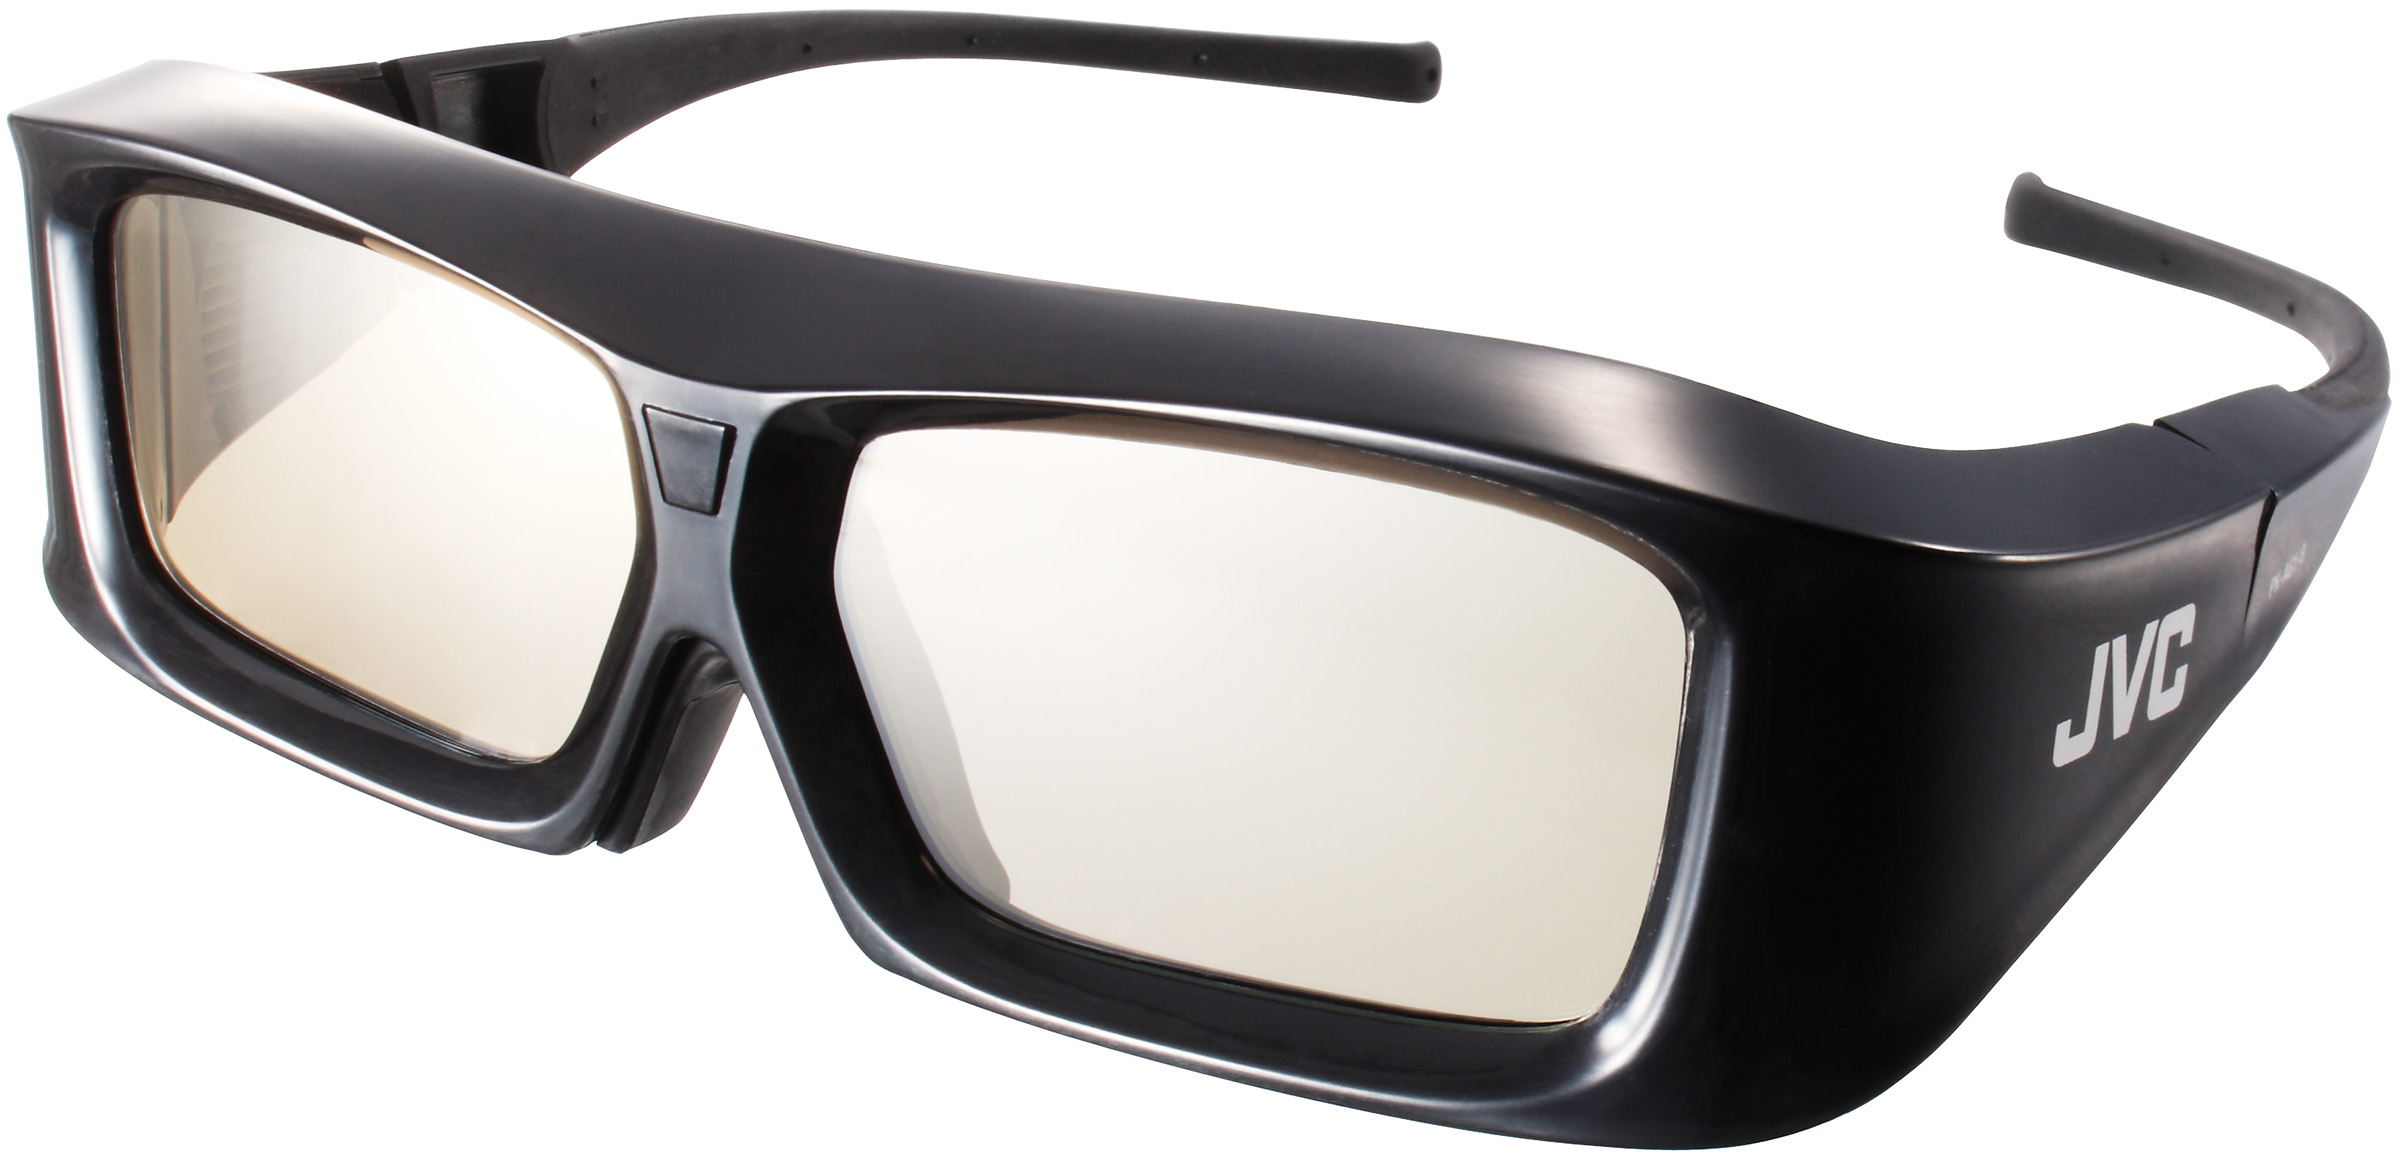 3d active shutter glasses driver